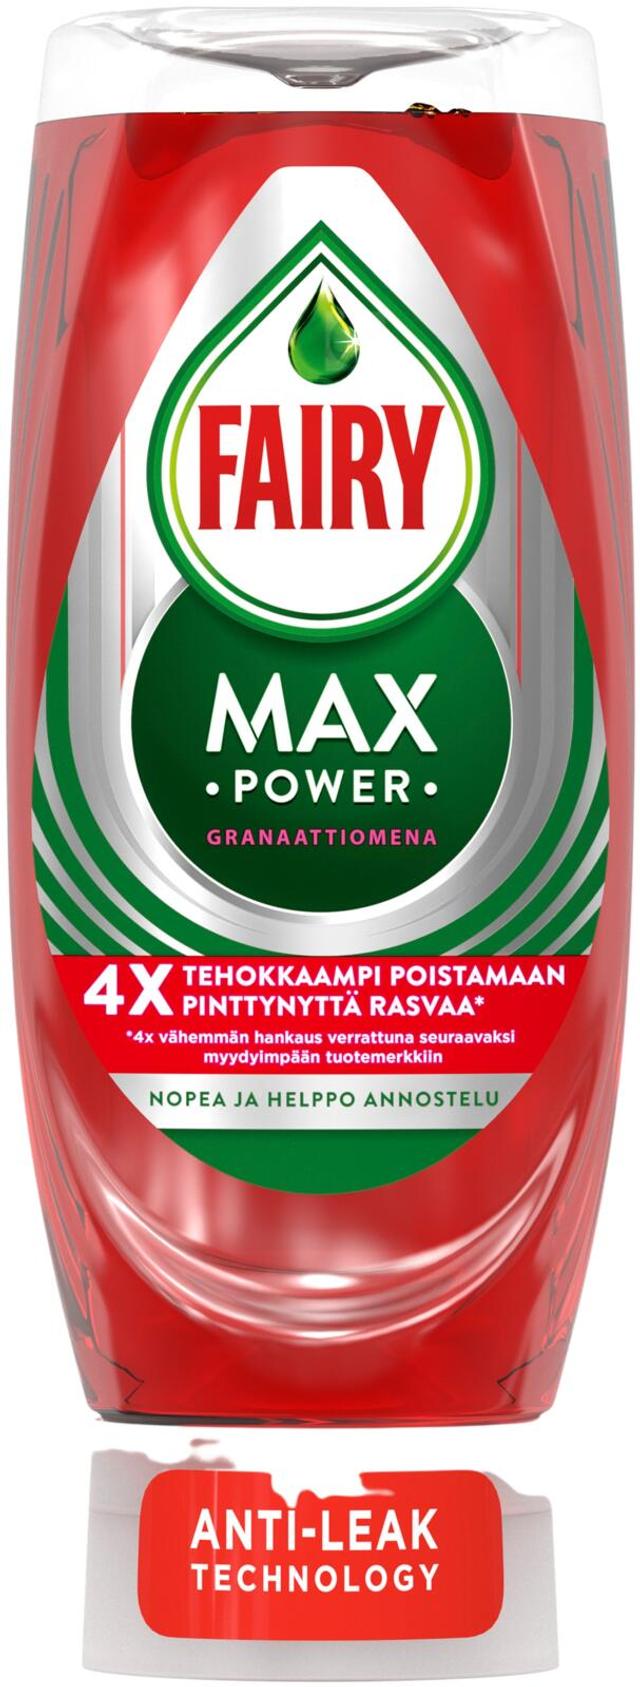 Fairy Max Power Granaattiomena 450ml astianpesuaine